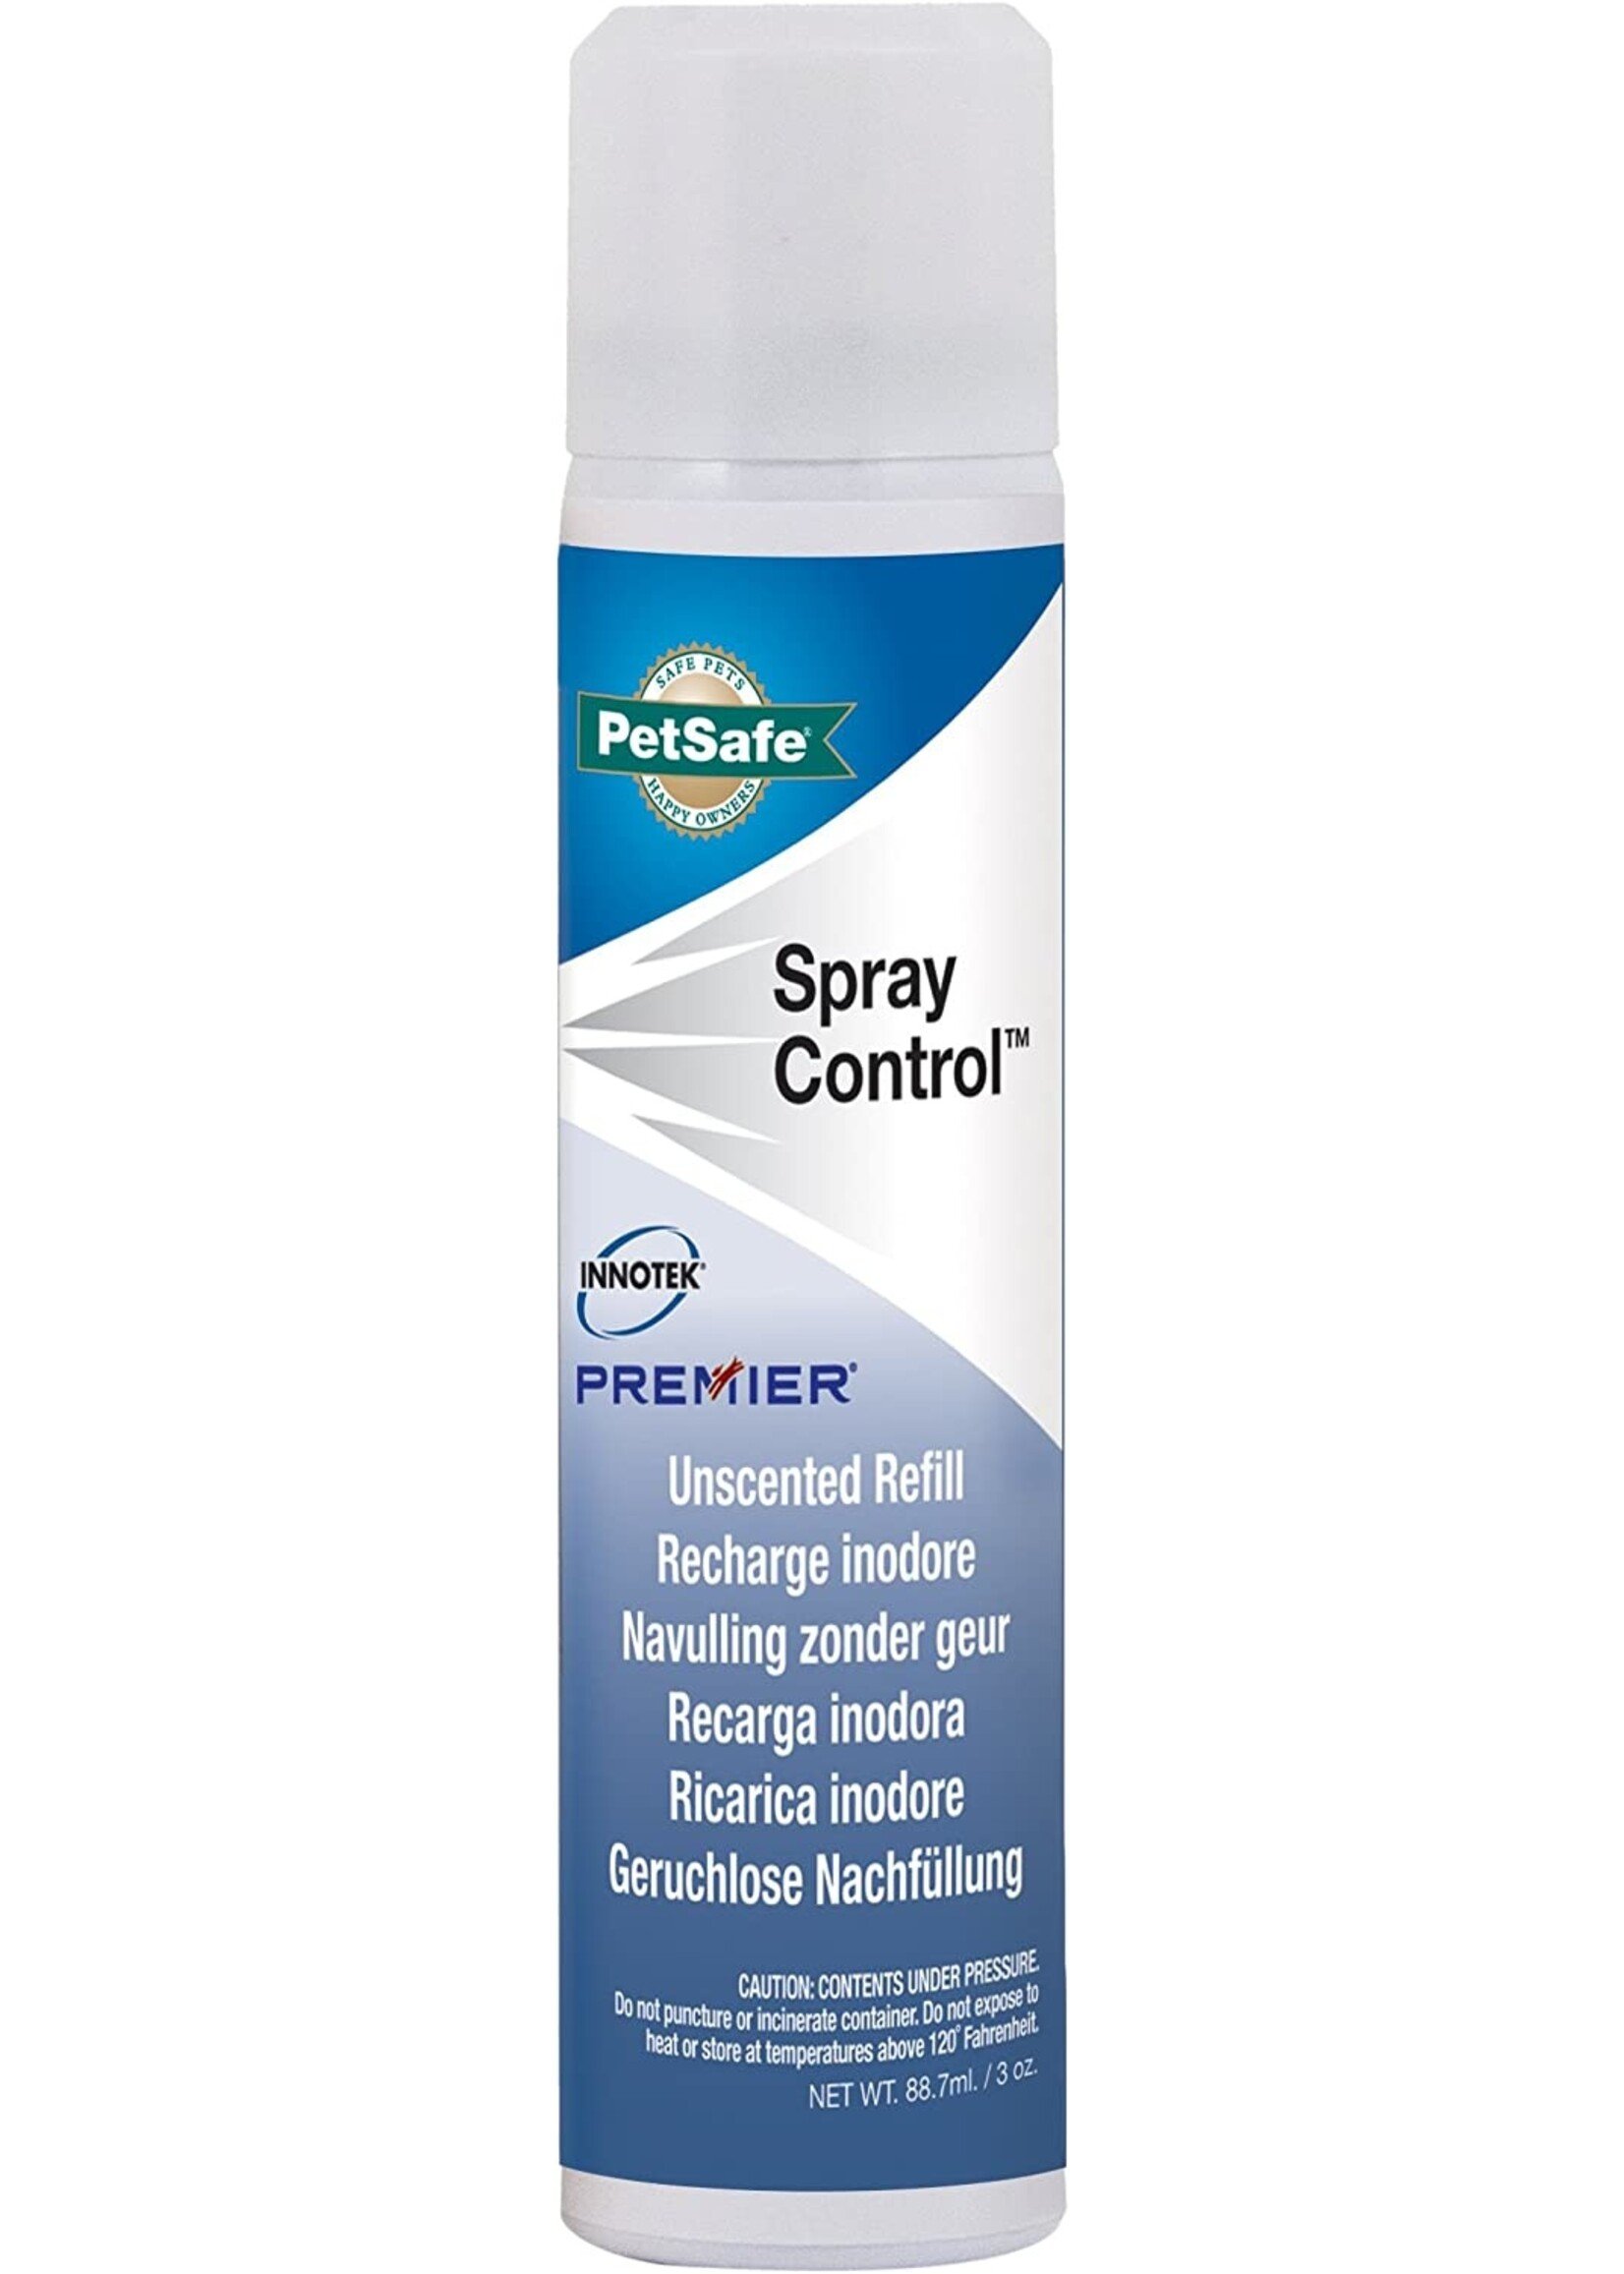 Petsafe PetSafe Unscented Refill for Spray Control 3oz